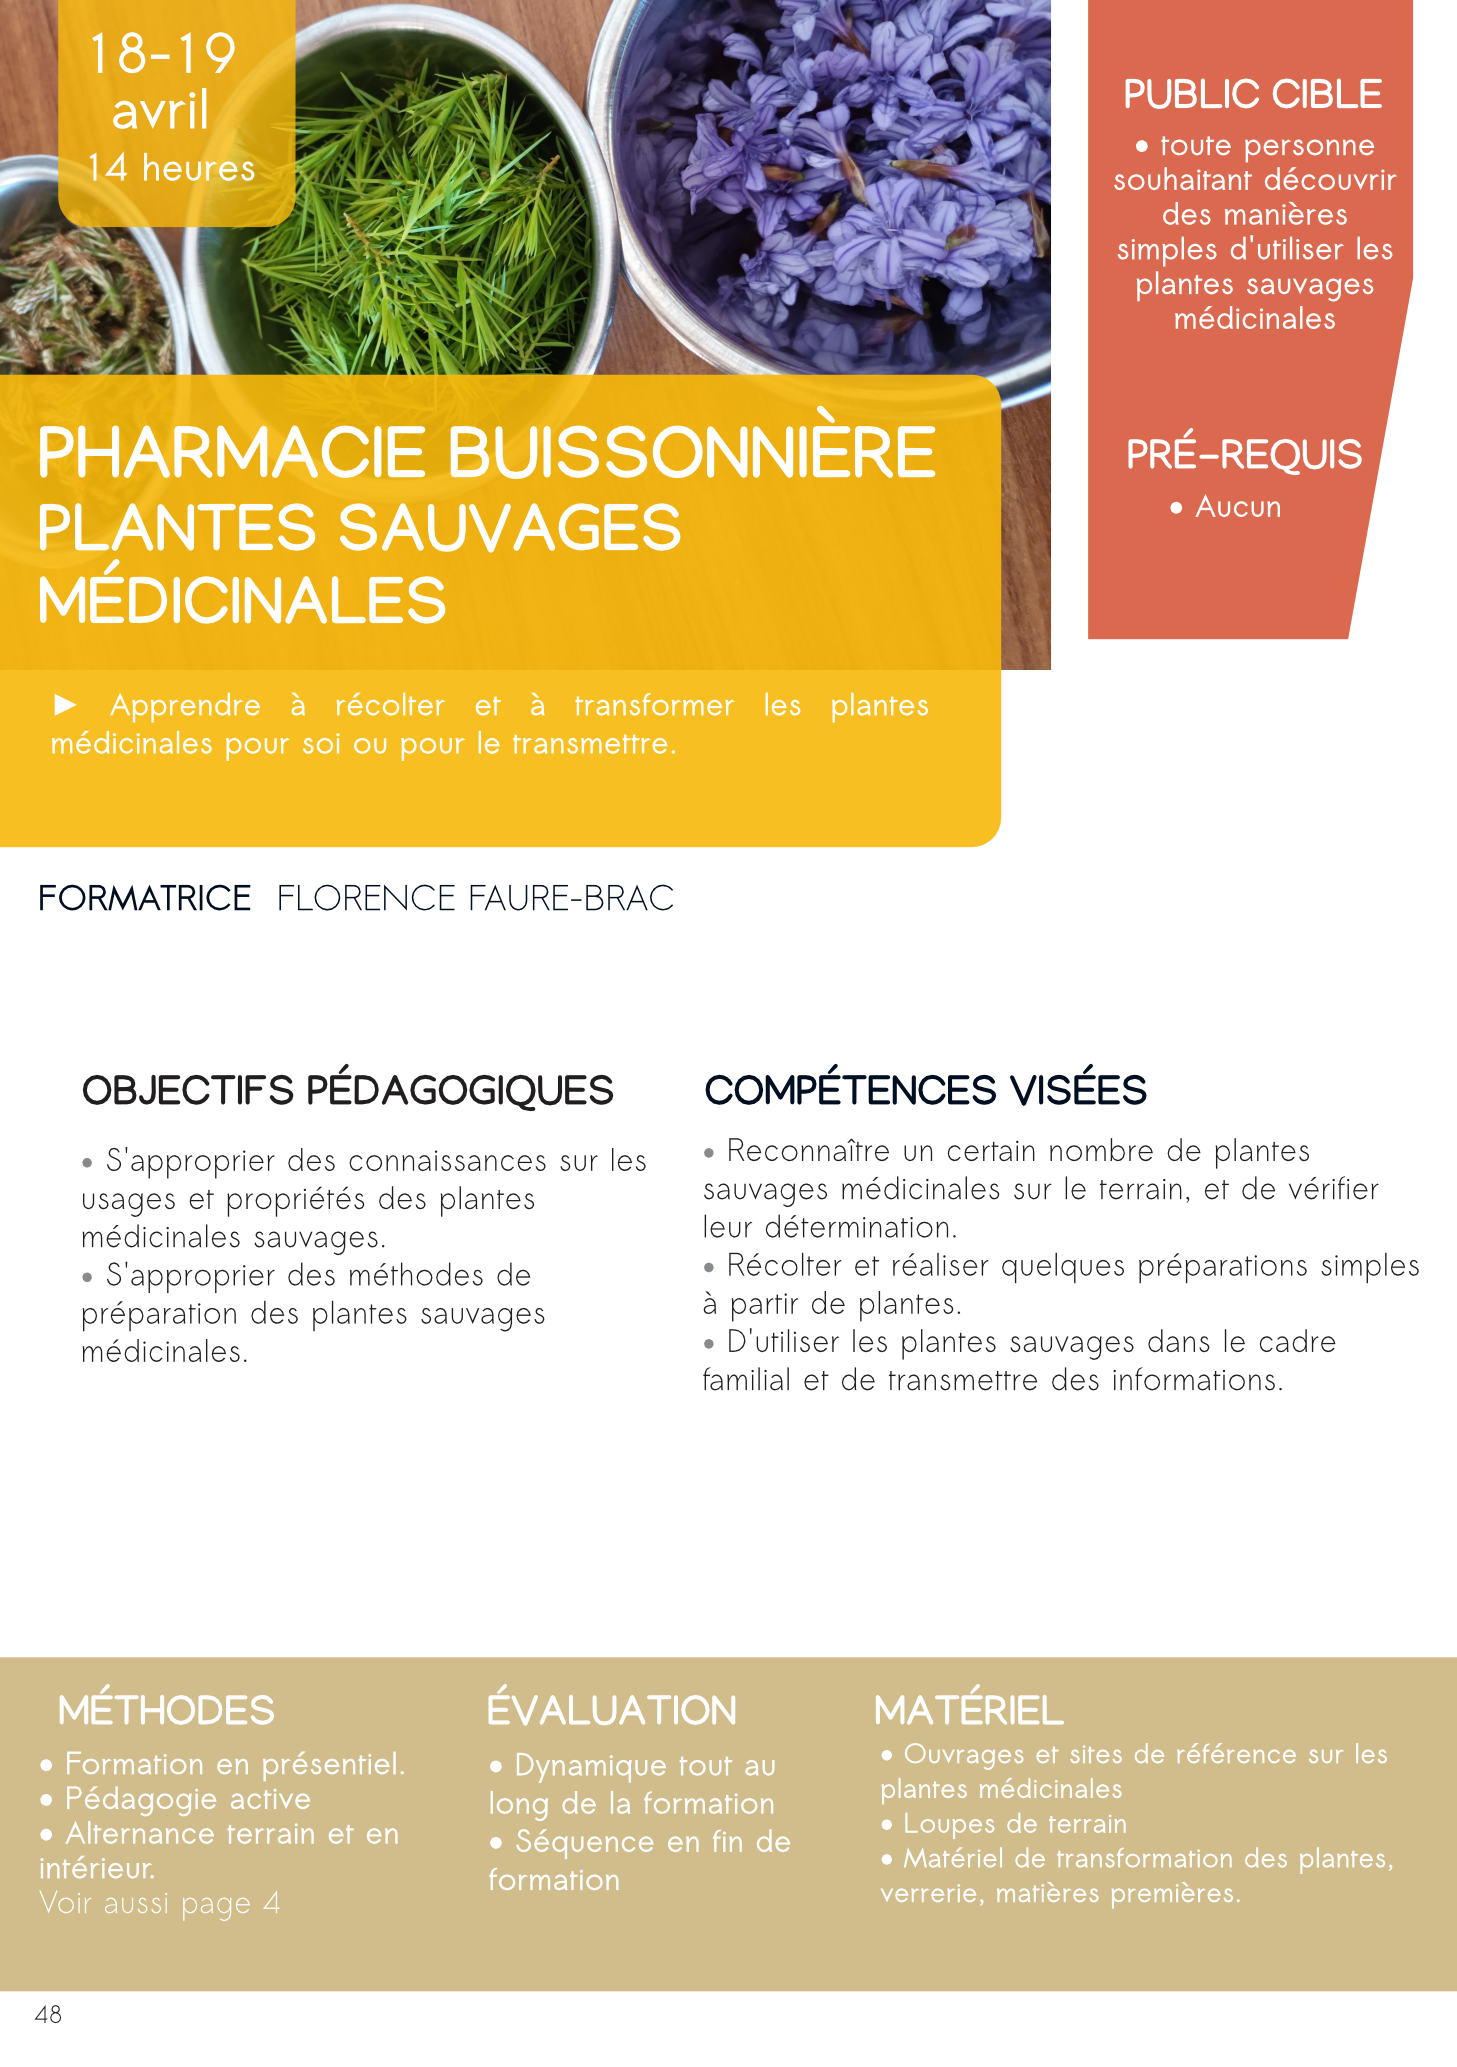 pharmacie buissonière formation naturaliste plante medinale sauvage occitanie